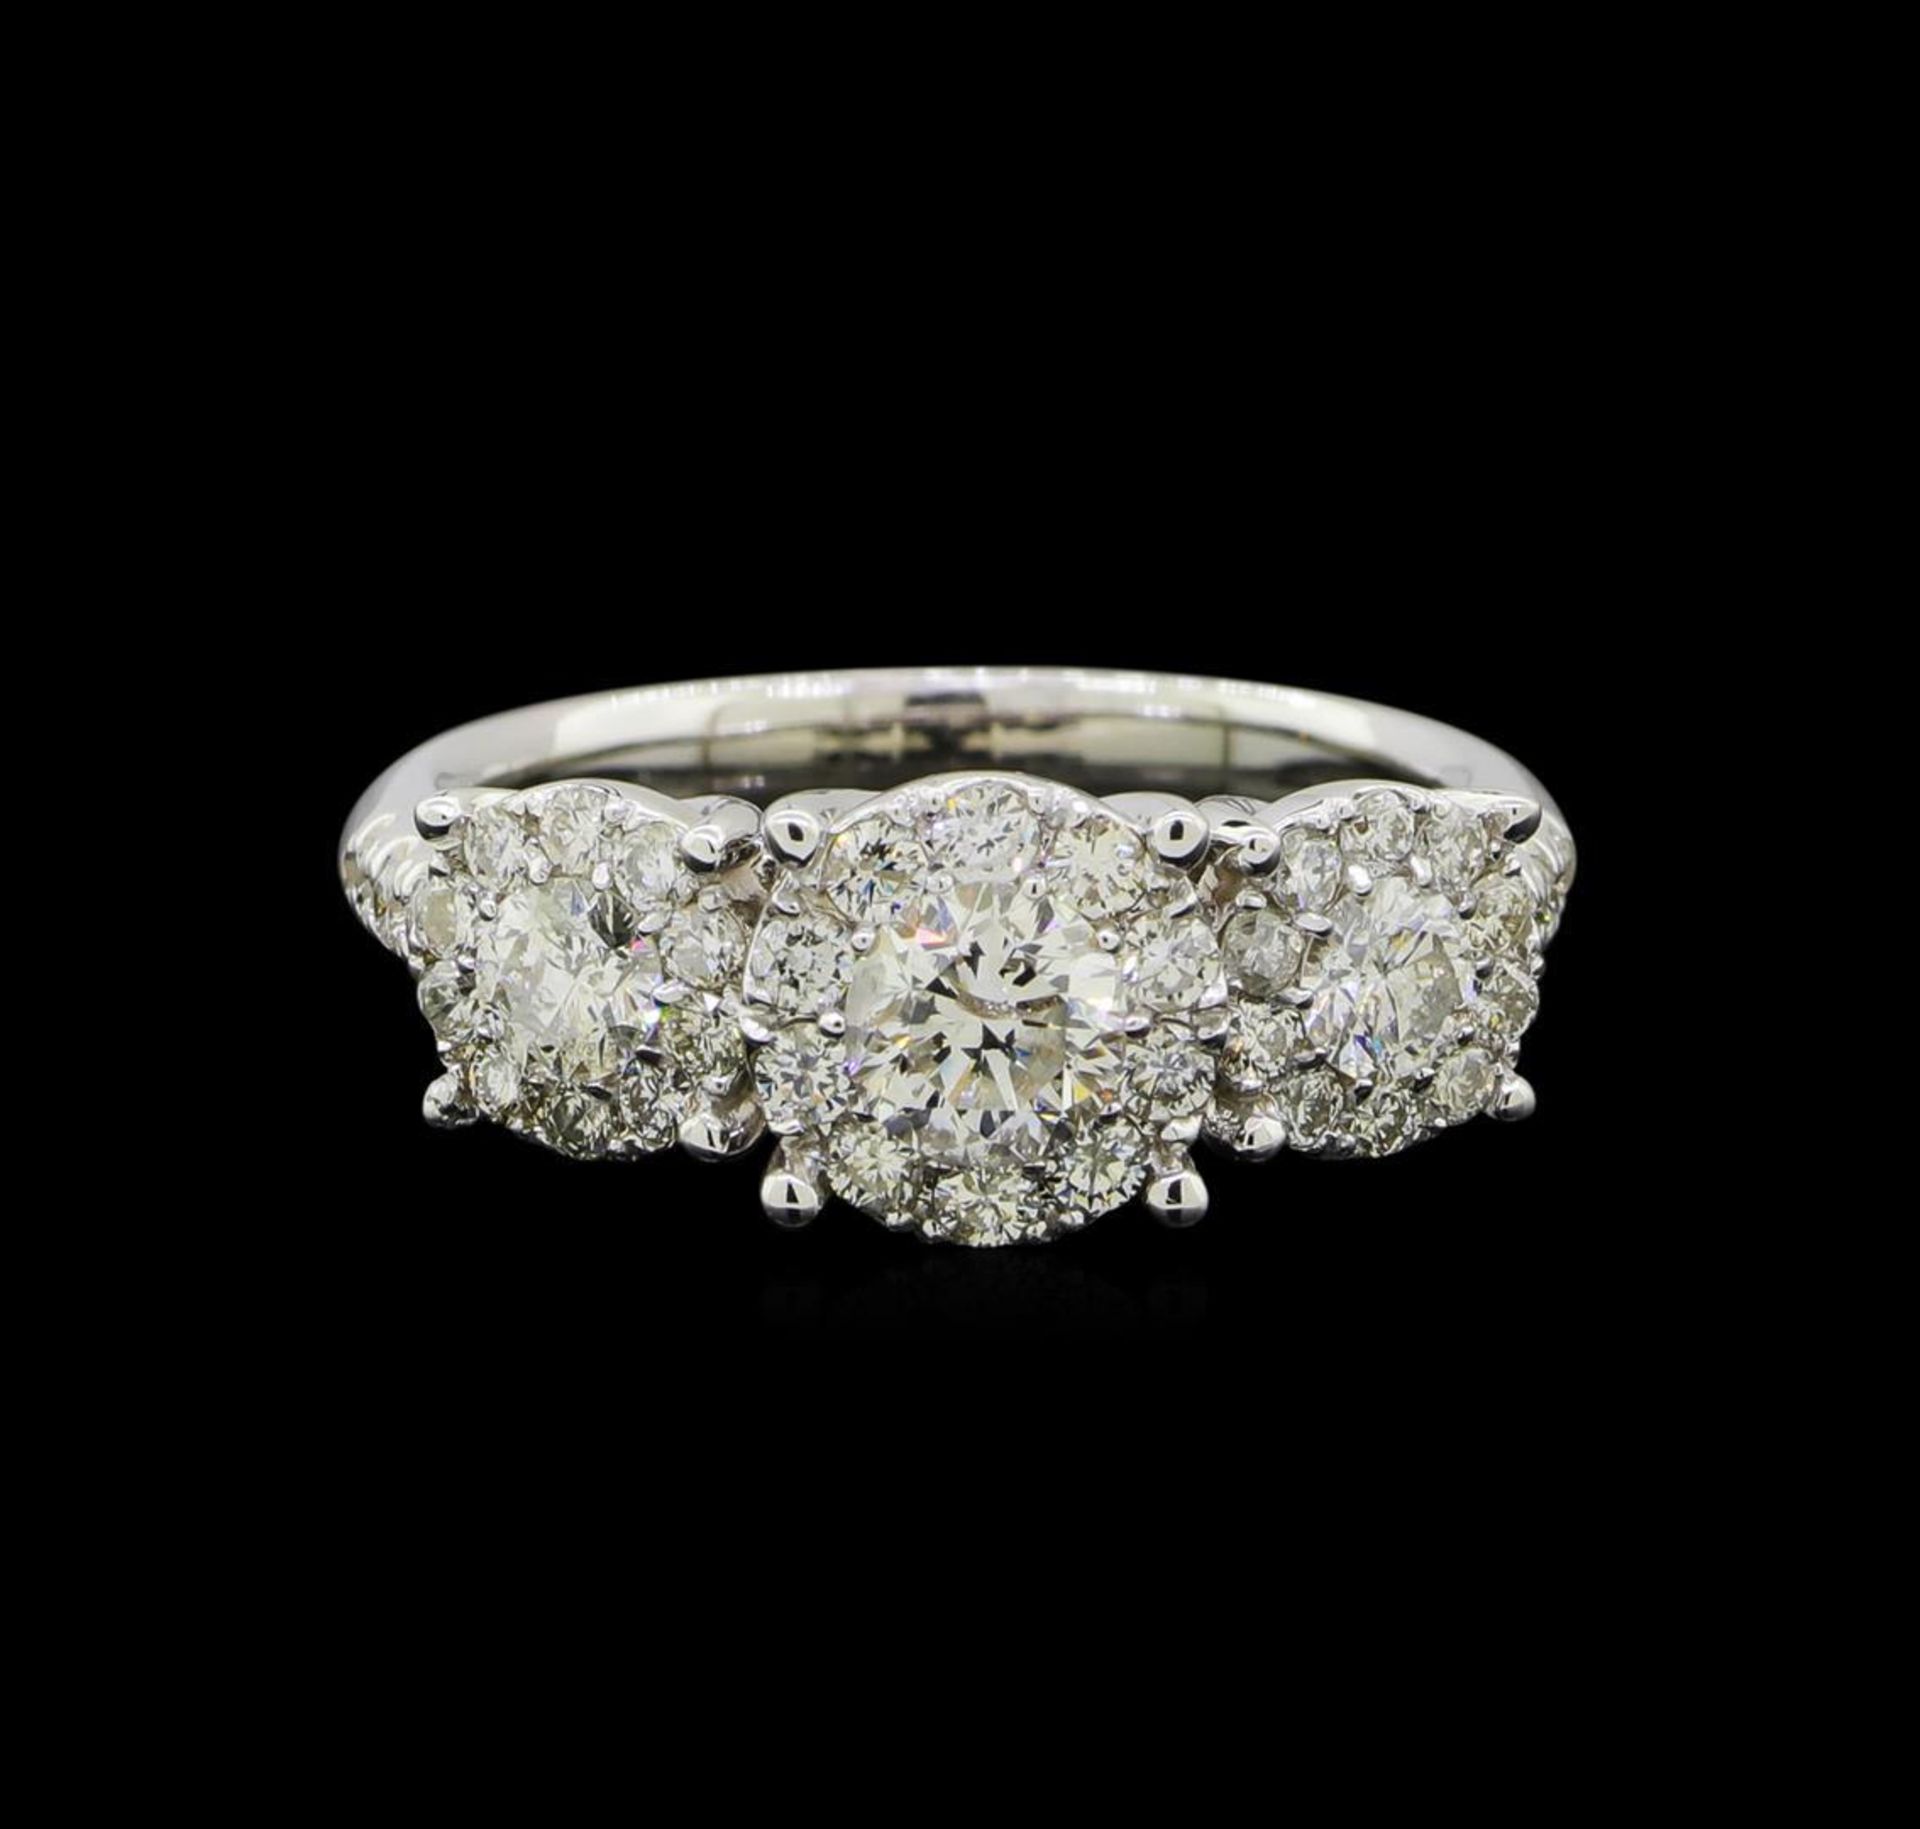 1.54 ctw Diamond Ring - 14KT White Gold - Image 2 of 5